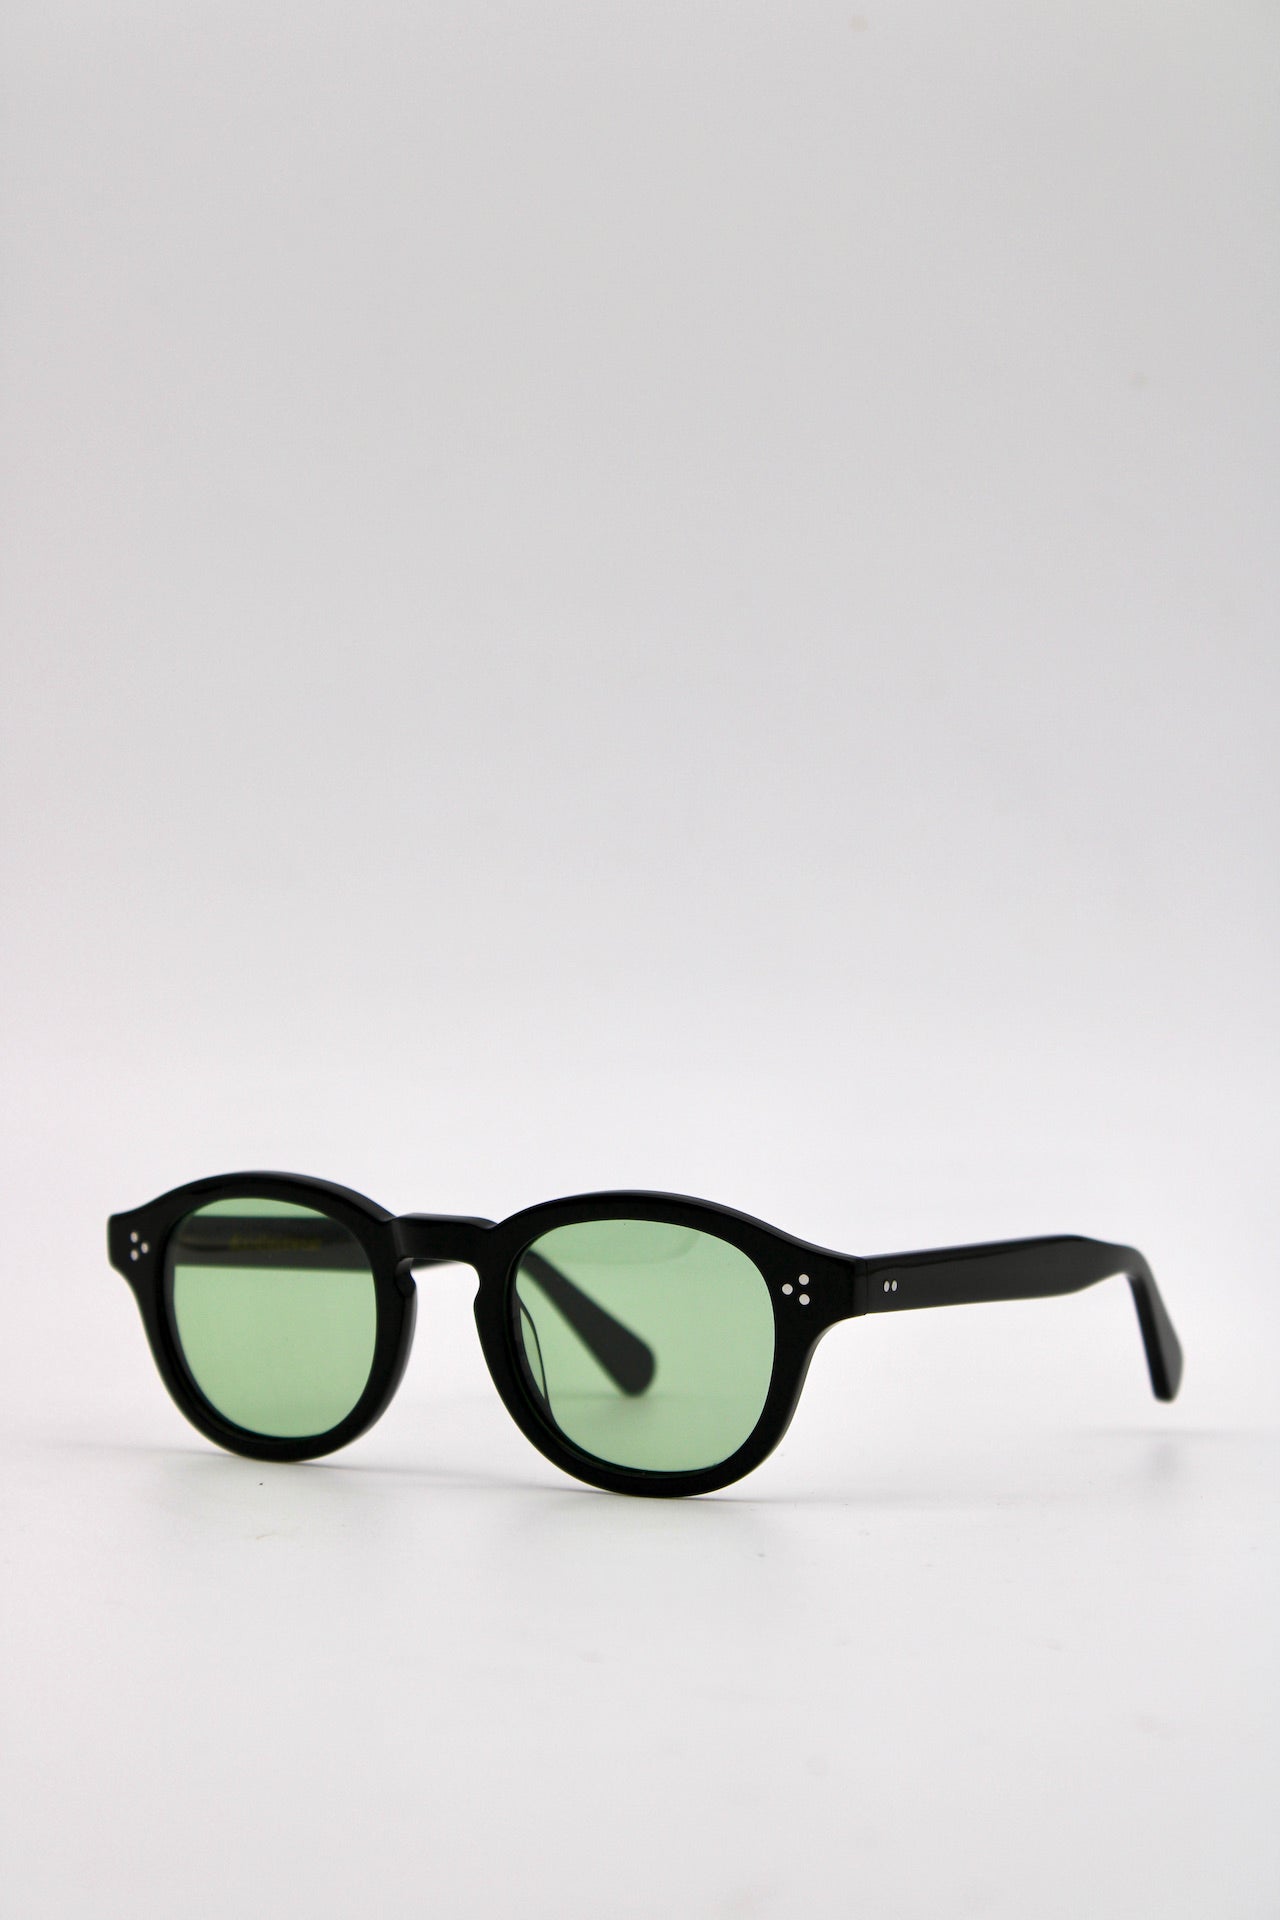 105 Originals Black Frame with Candy Apple Green Lenses